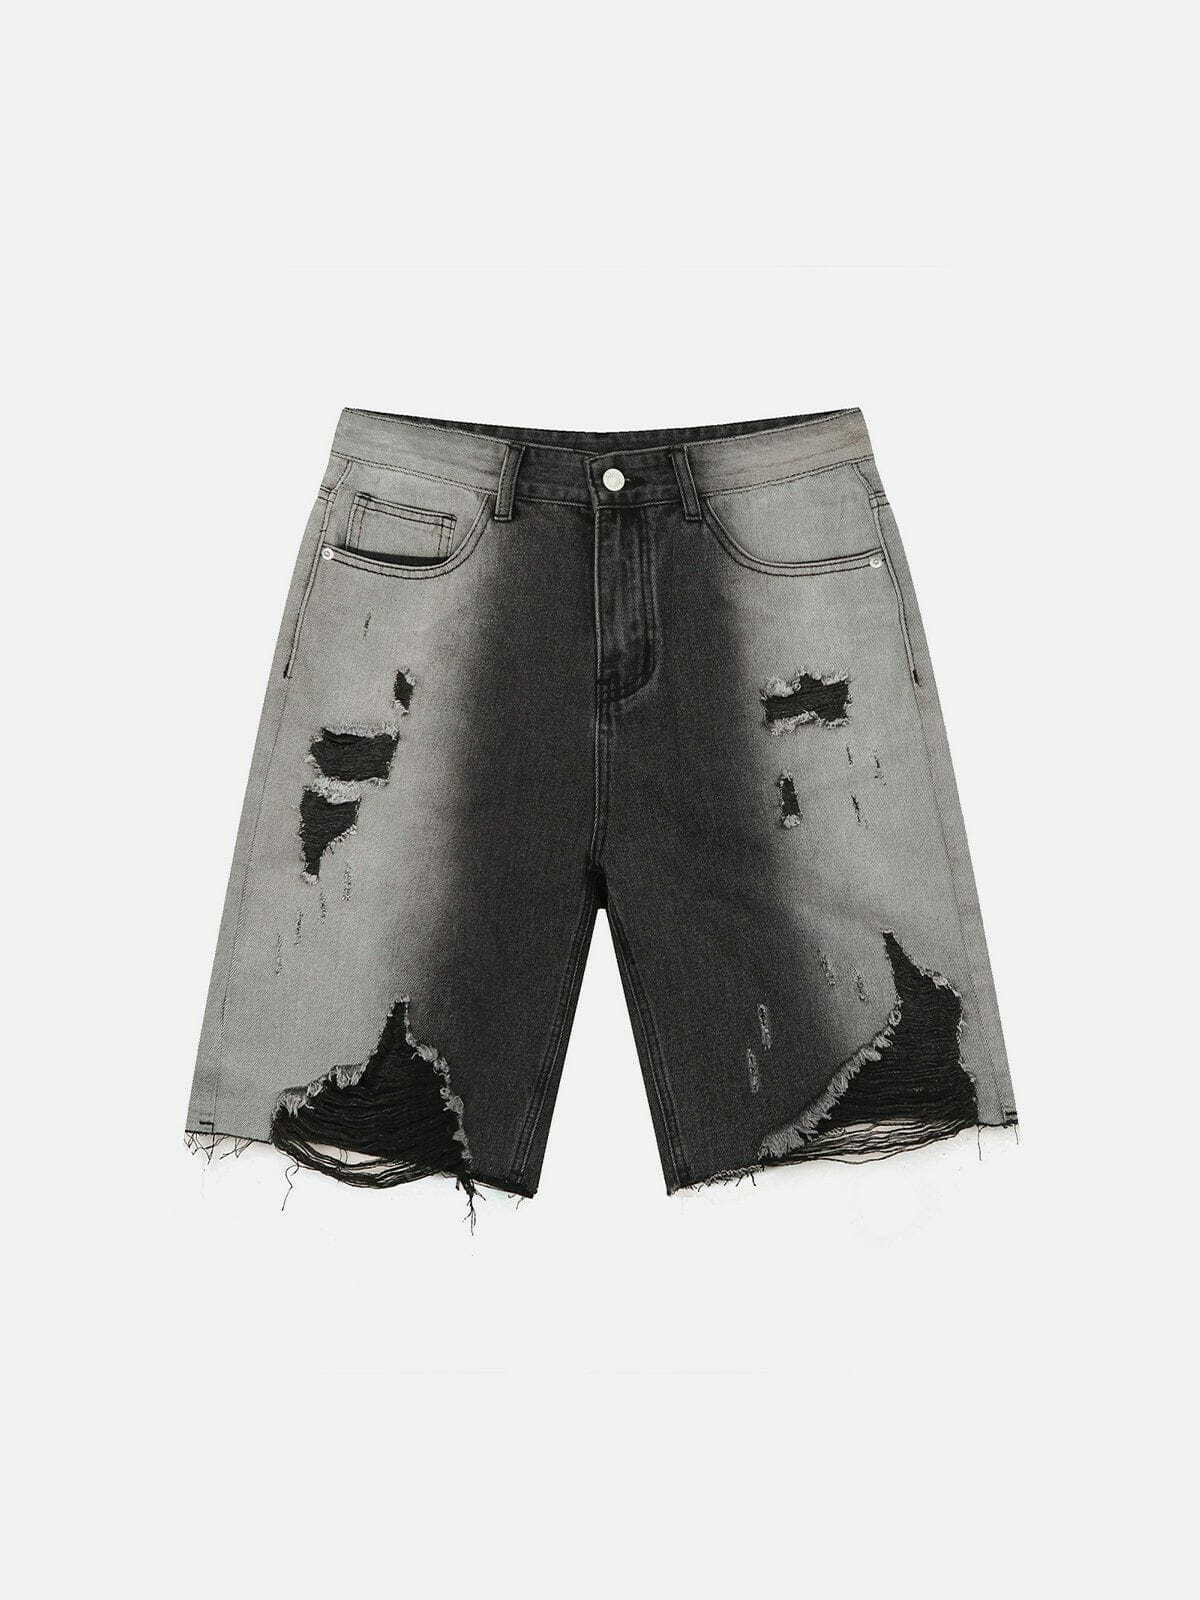 retro denim shorts edgy urban streetwear 5190